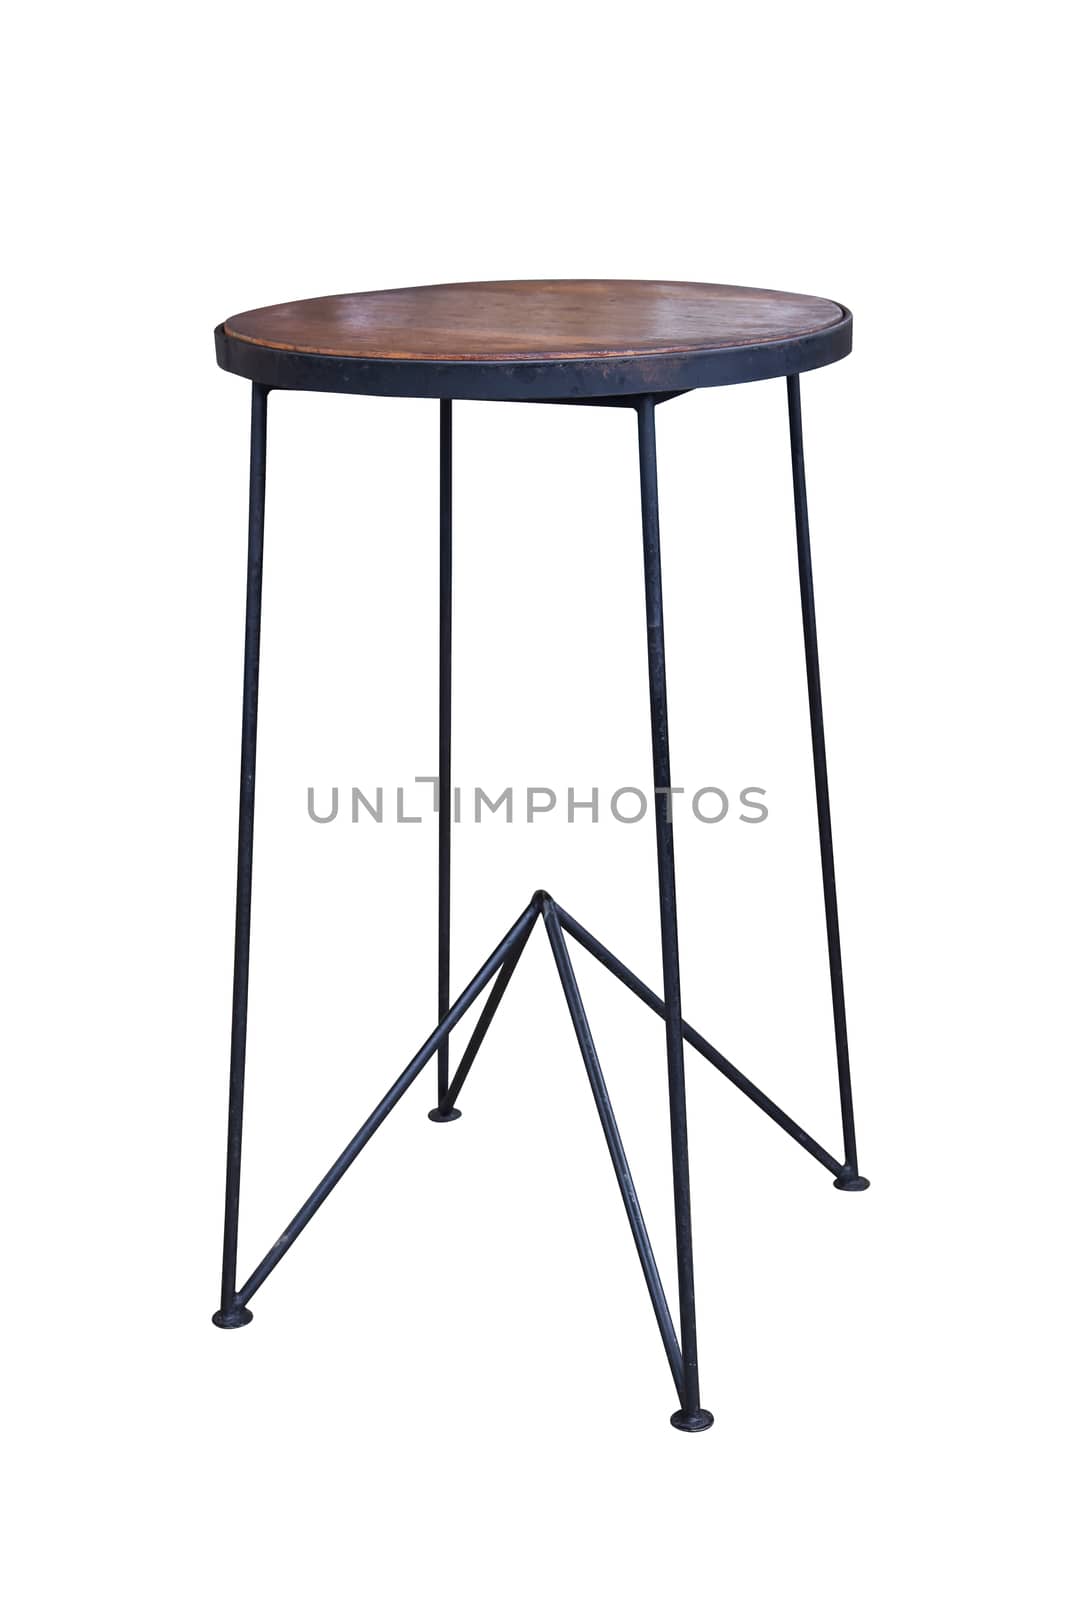 Wooden table steel legs. by NuwatPhoto